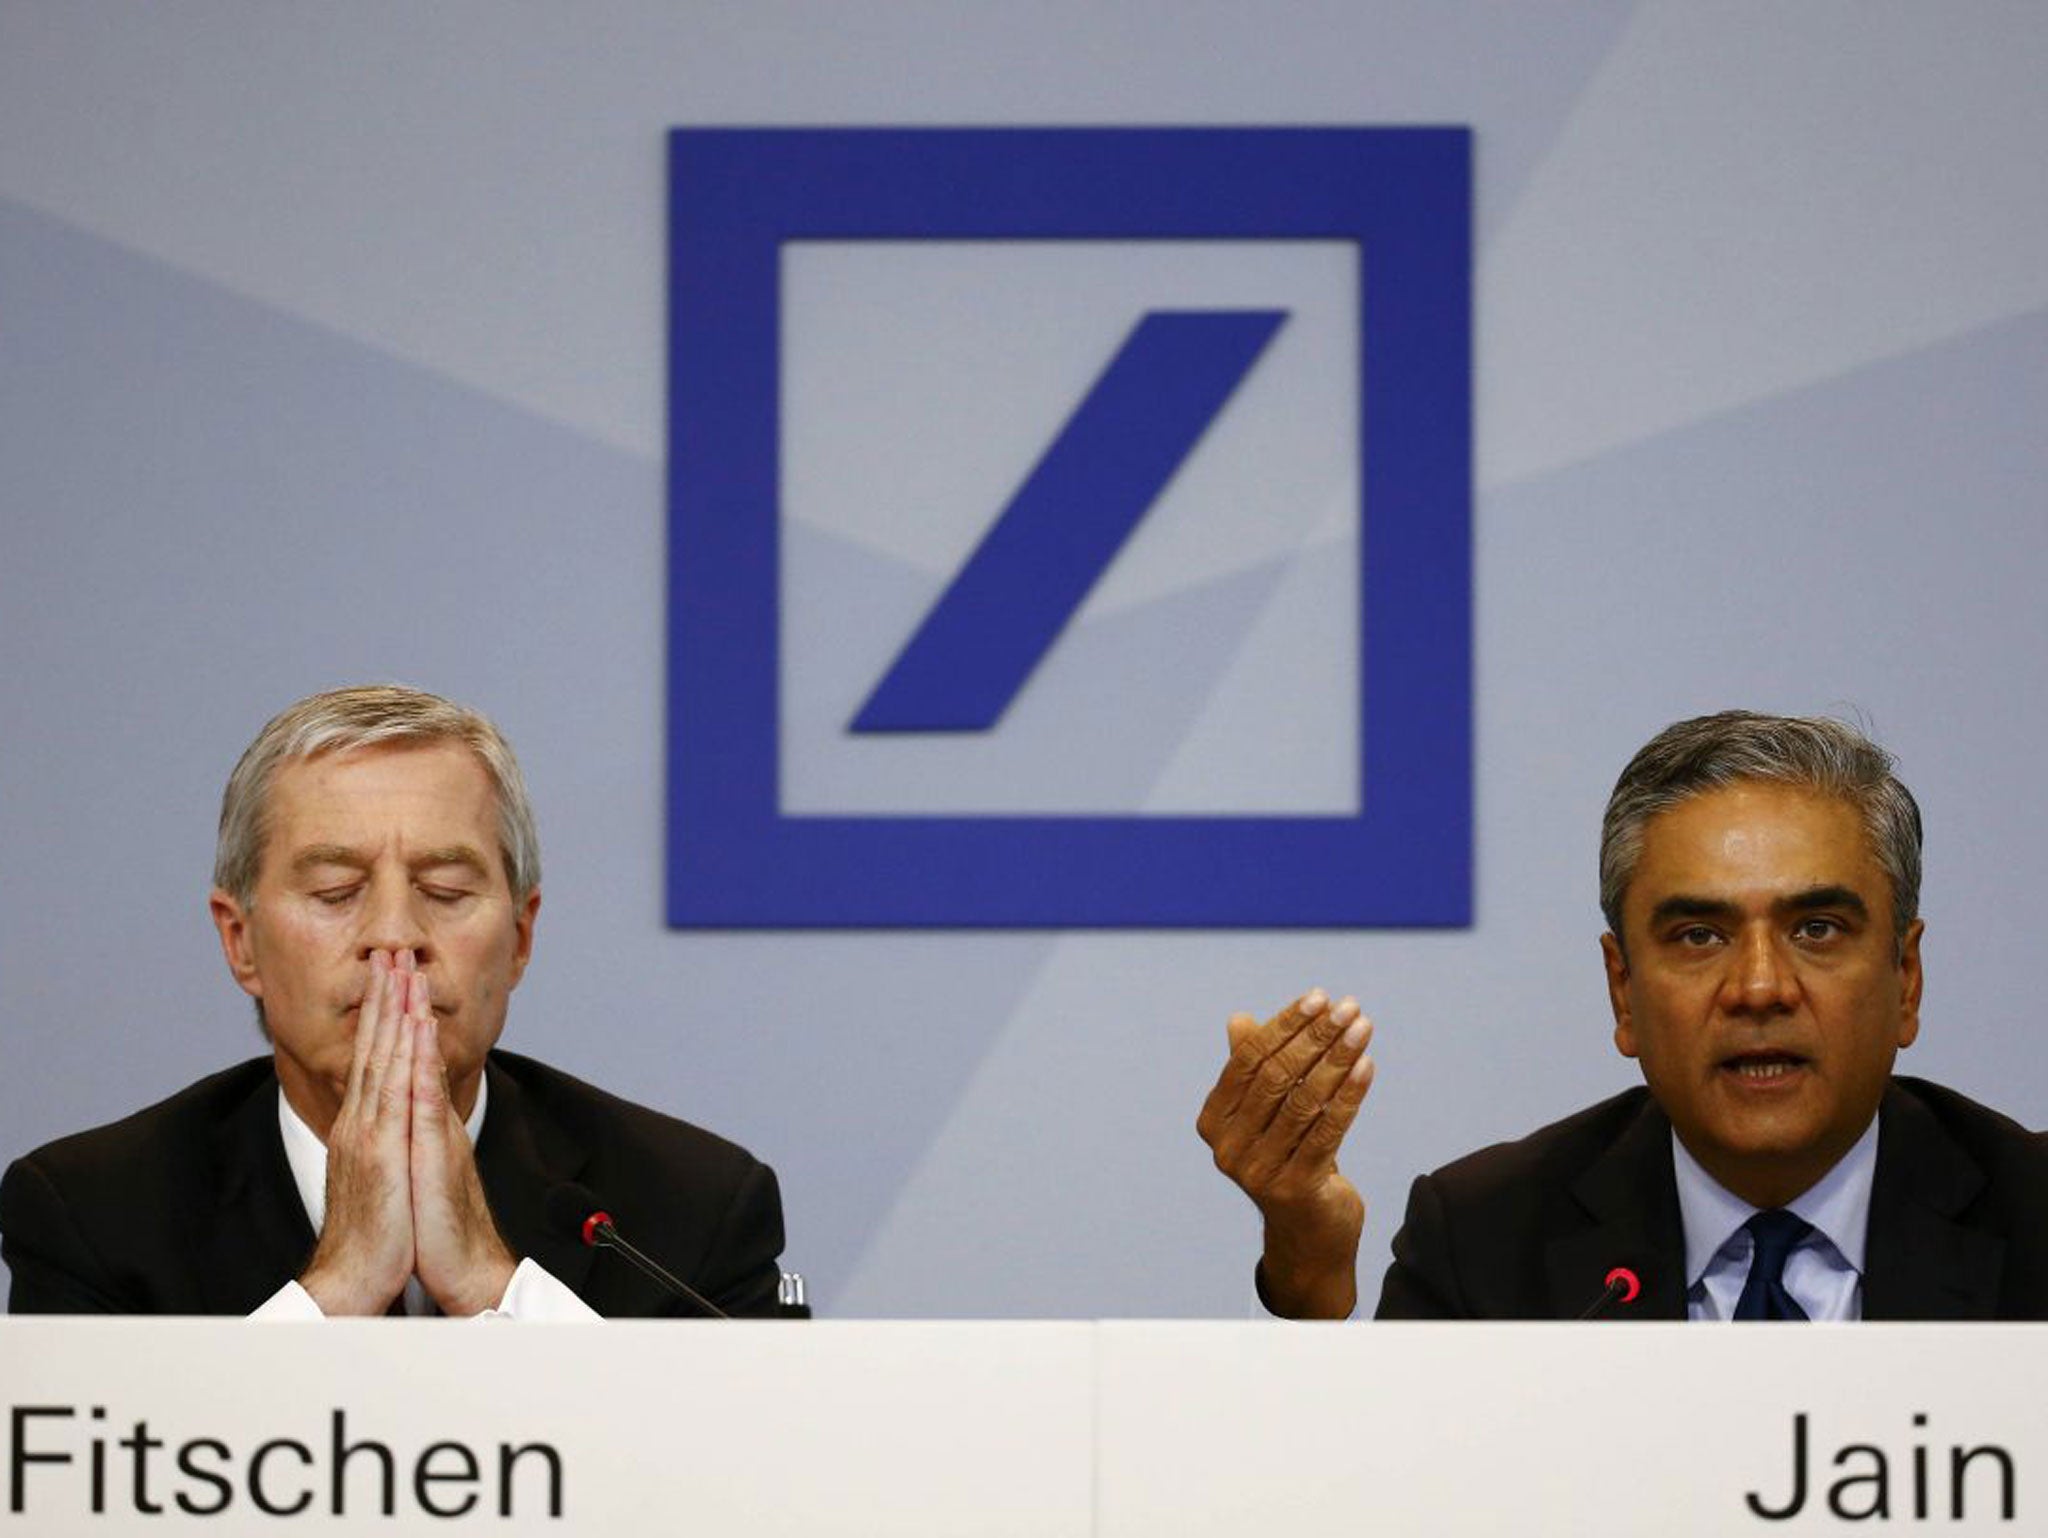 Deutsche Bank's co-chief executives, Anshu Jain and Jurgen Fitschen